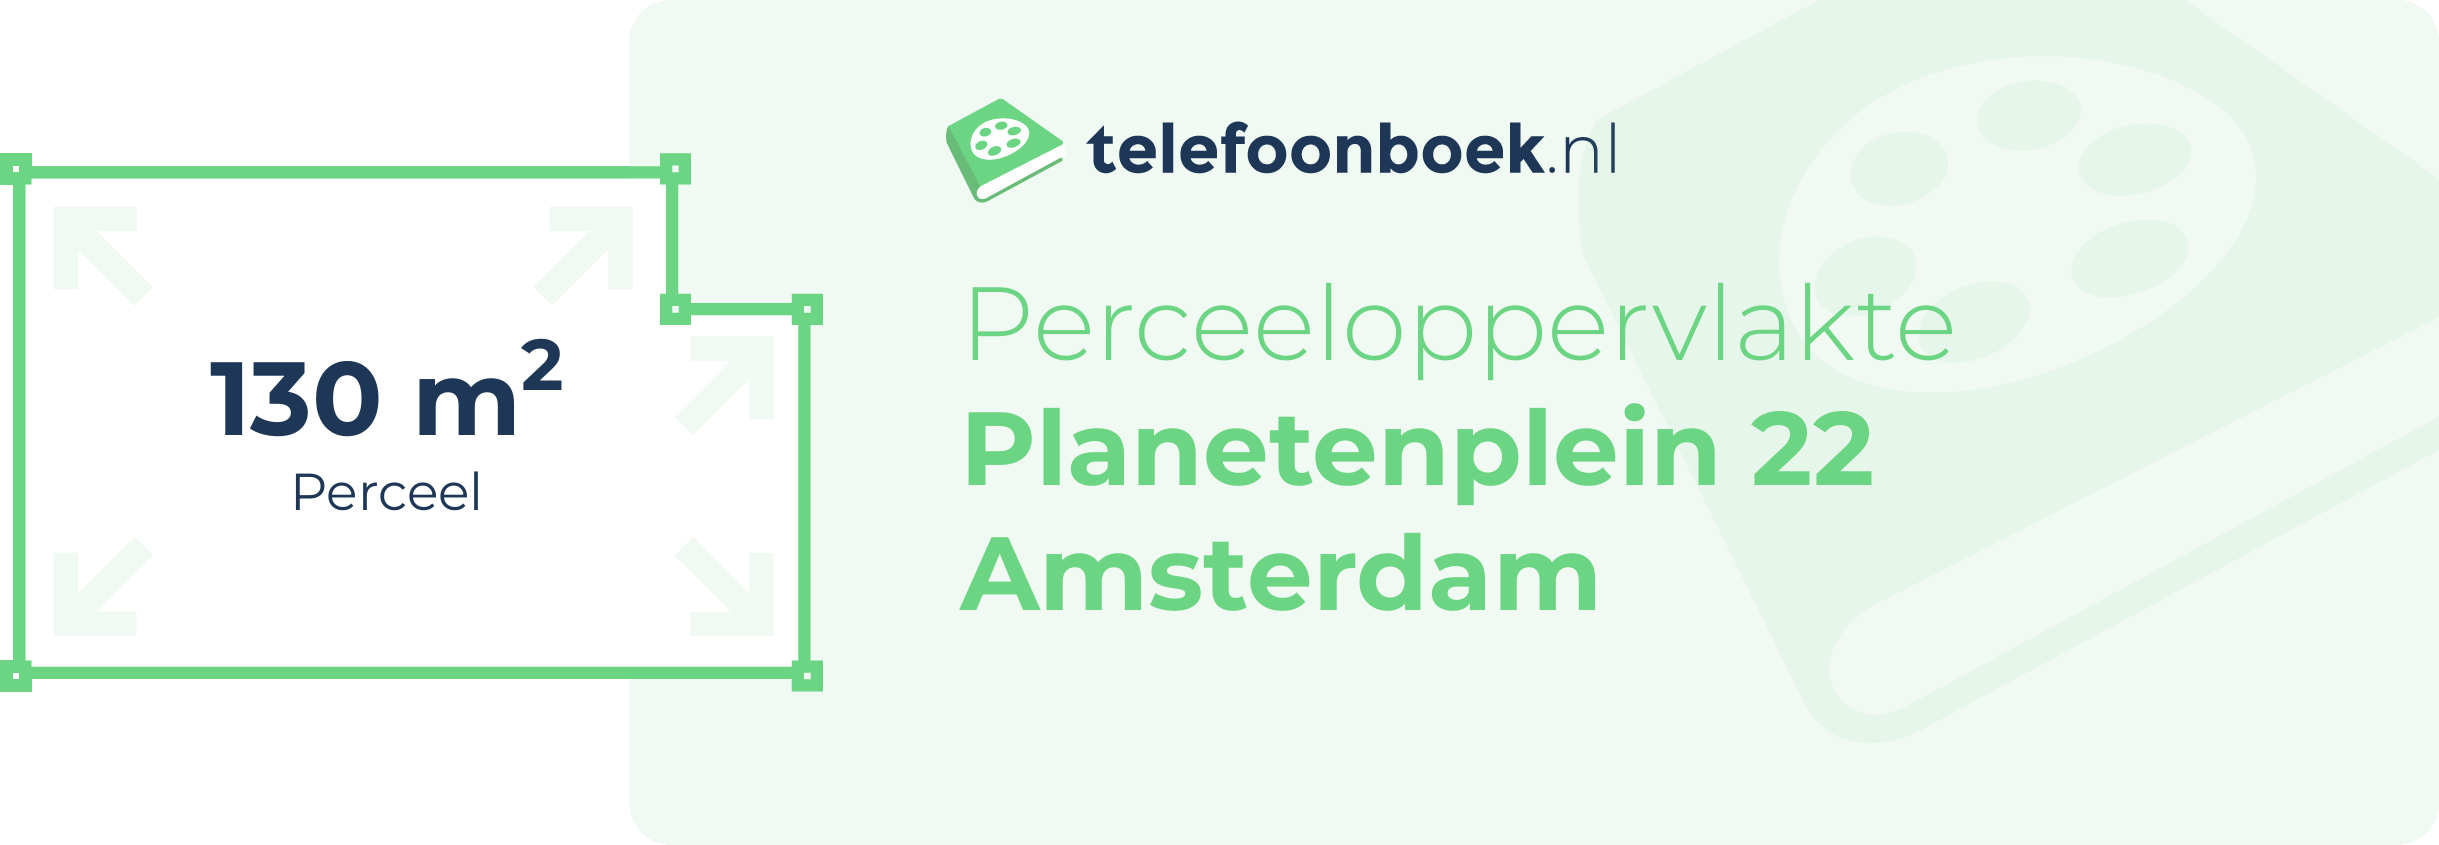 Perceeloppervlakte Planetenplein 22 Amsterdam